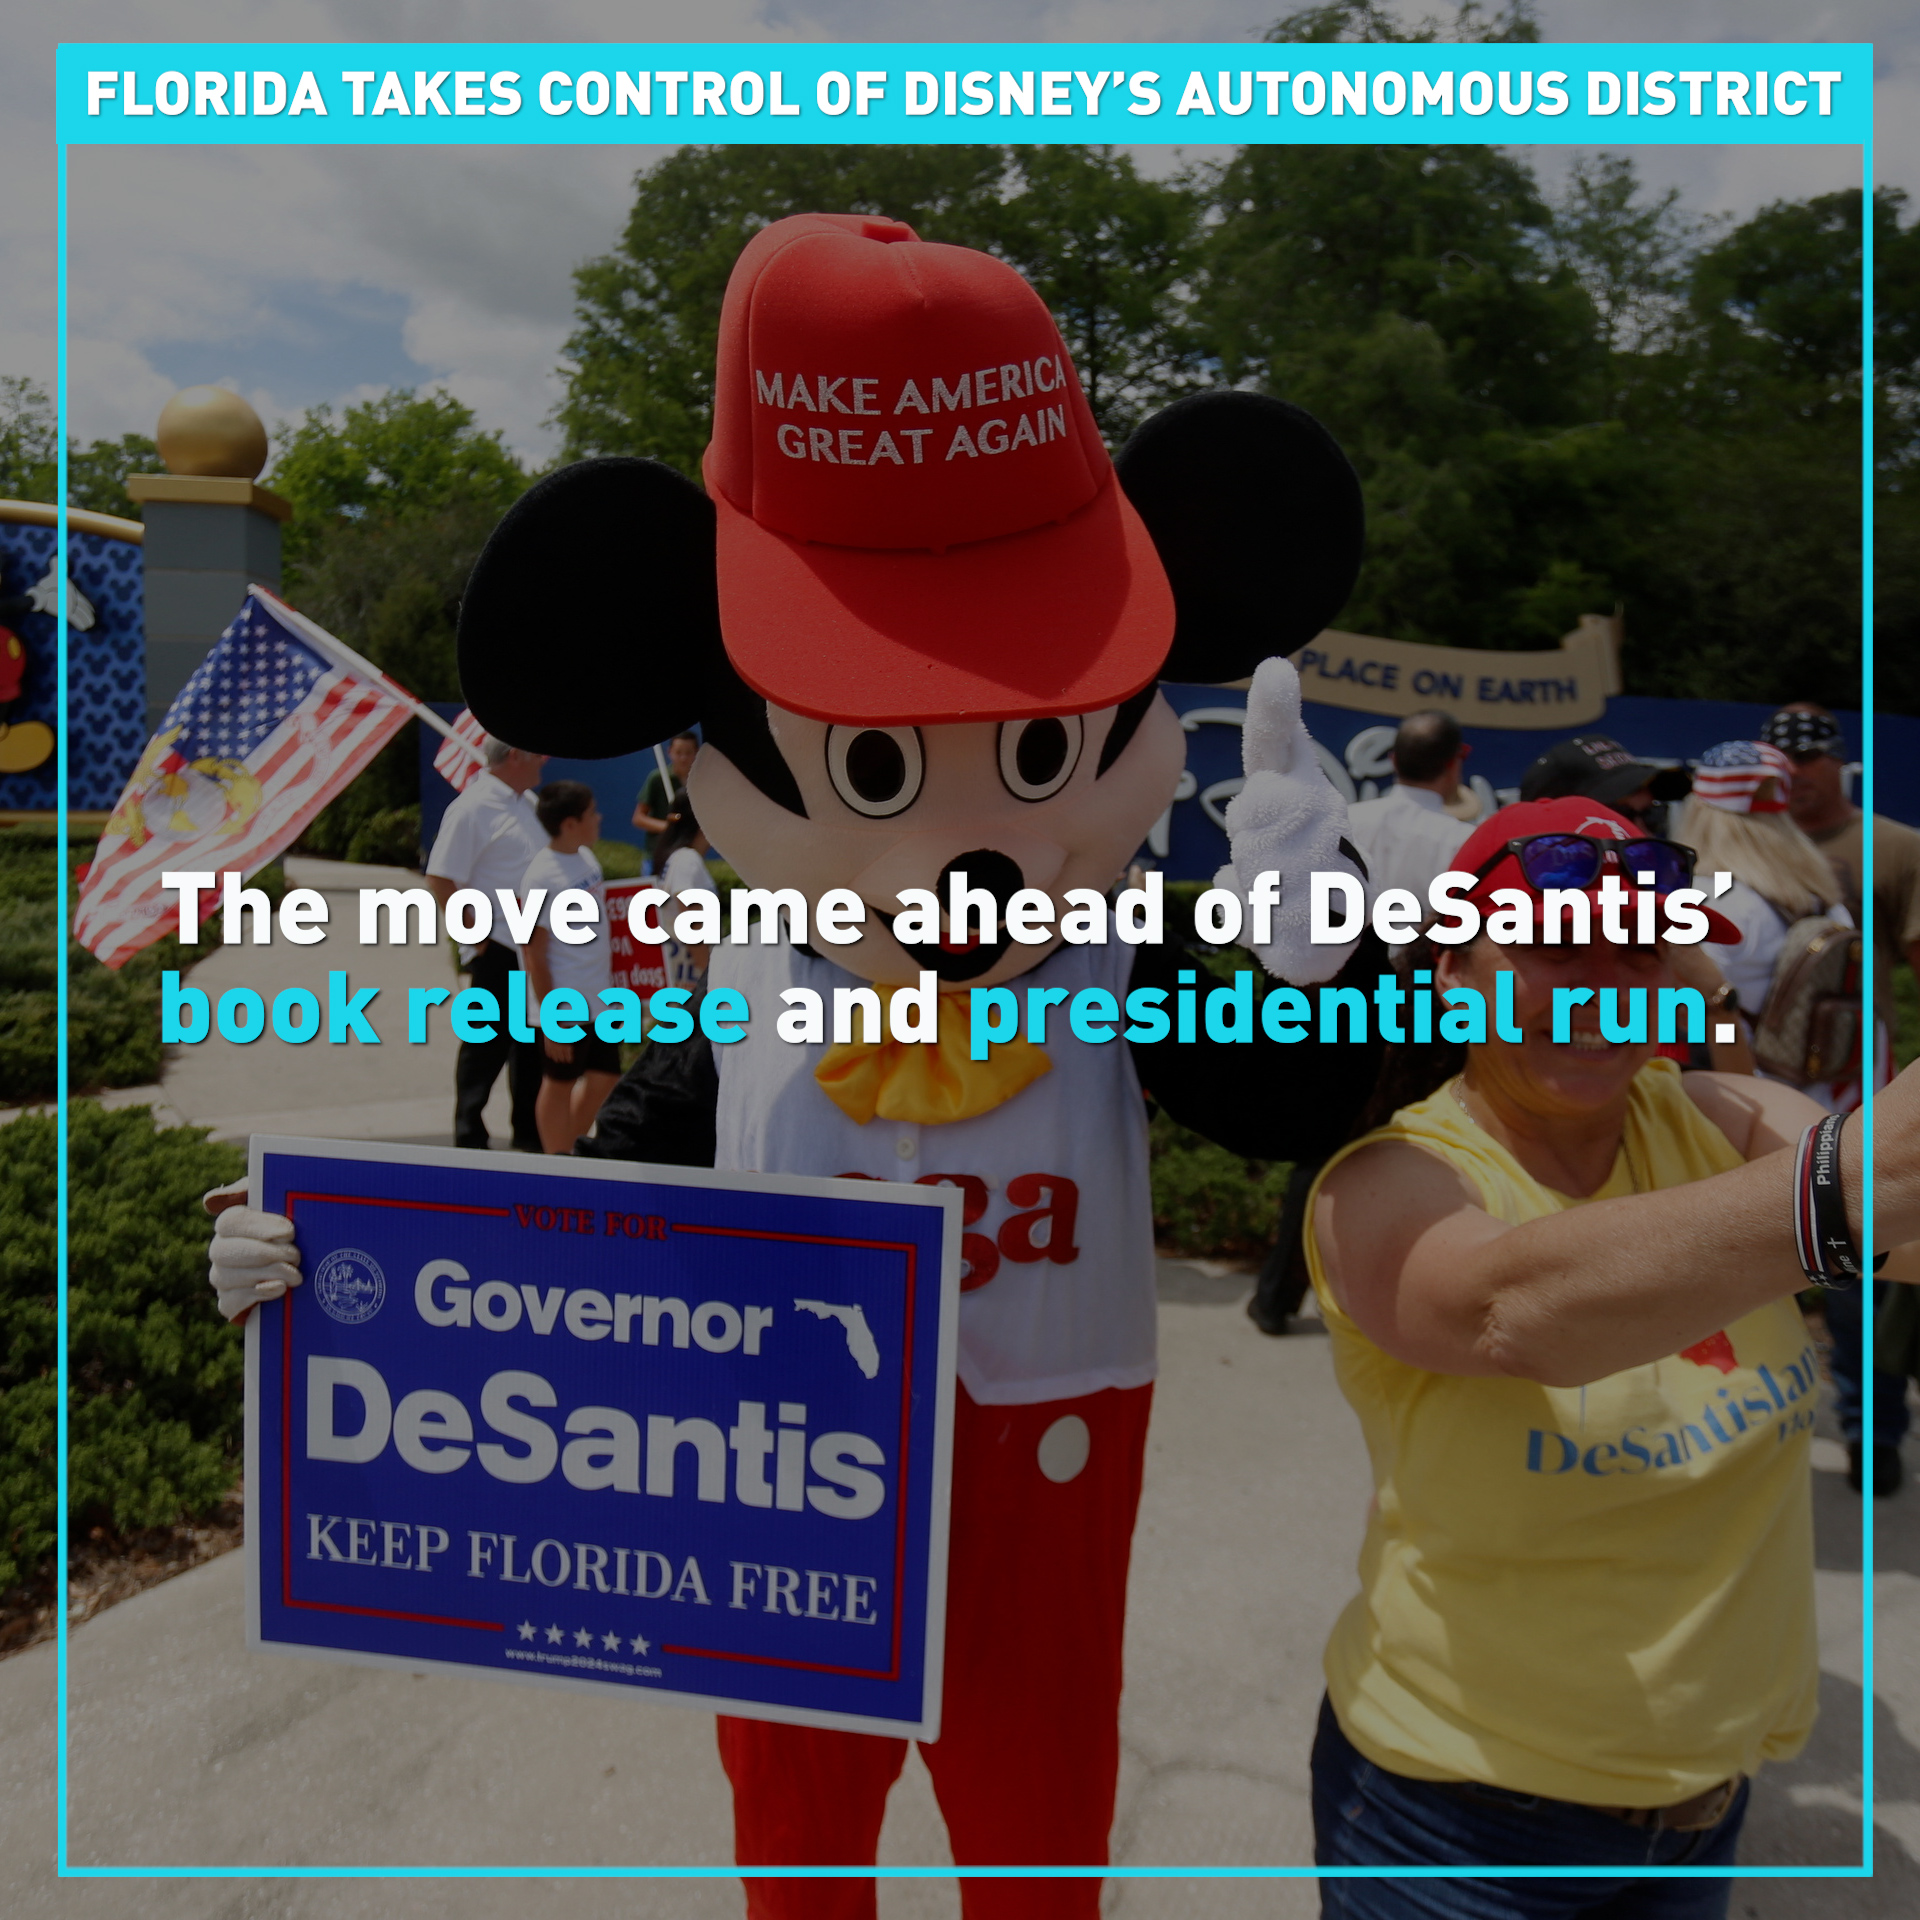 State of Florida takes control of Disney World's autonomous district 